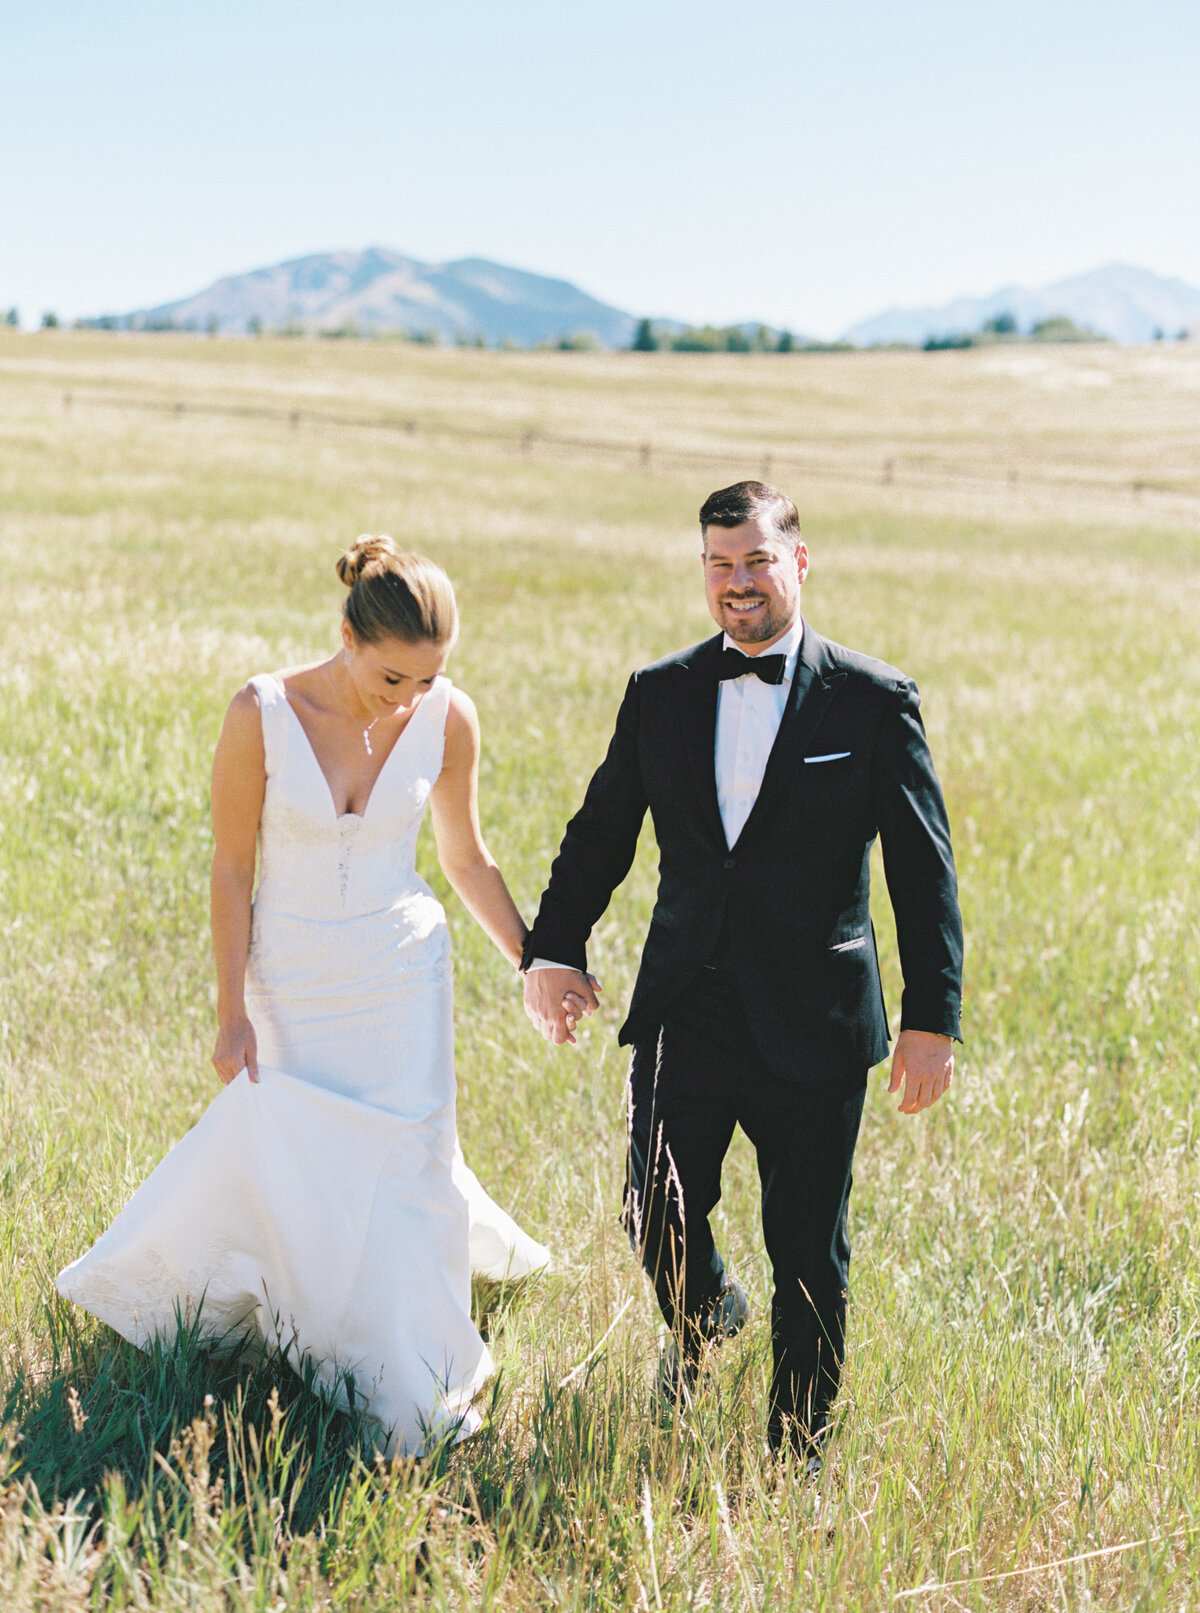 The Little Nell, Aspen Colorado bride and groom